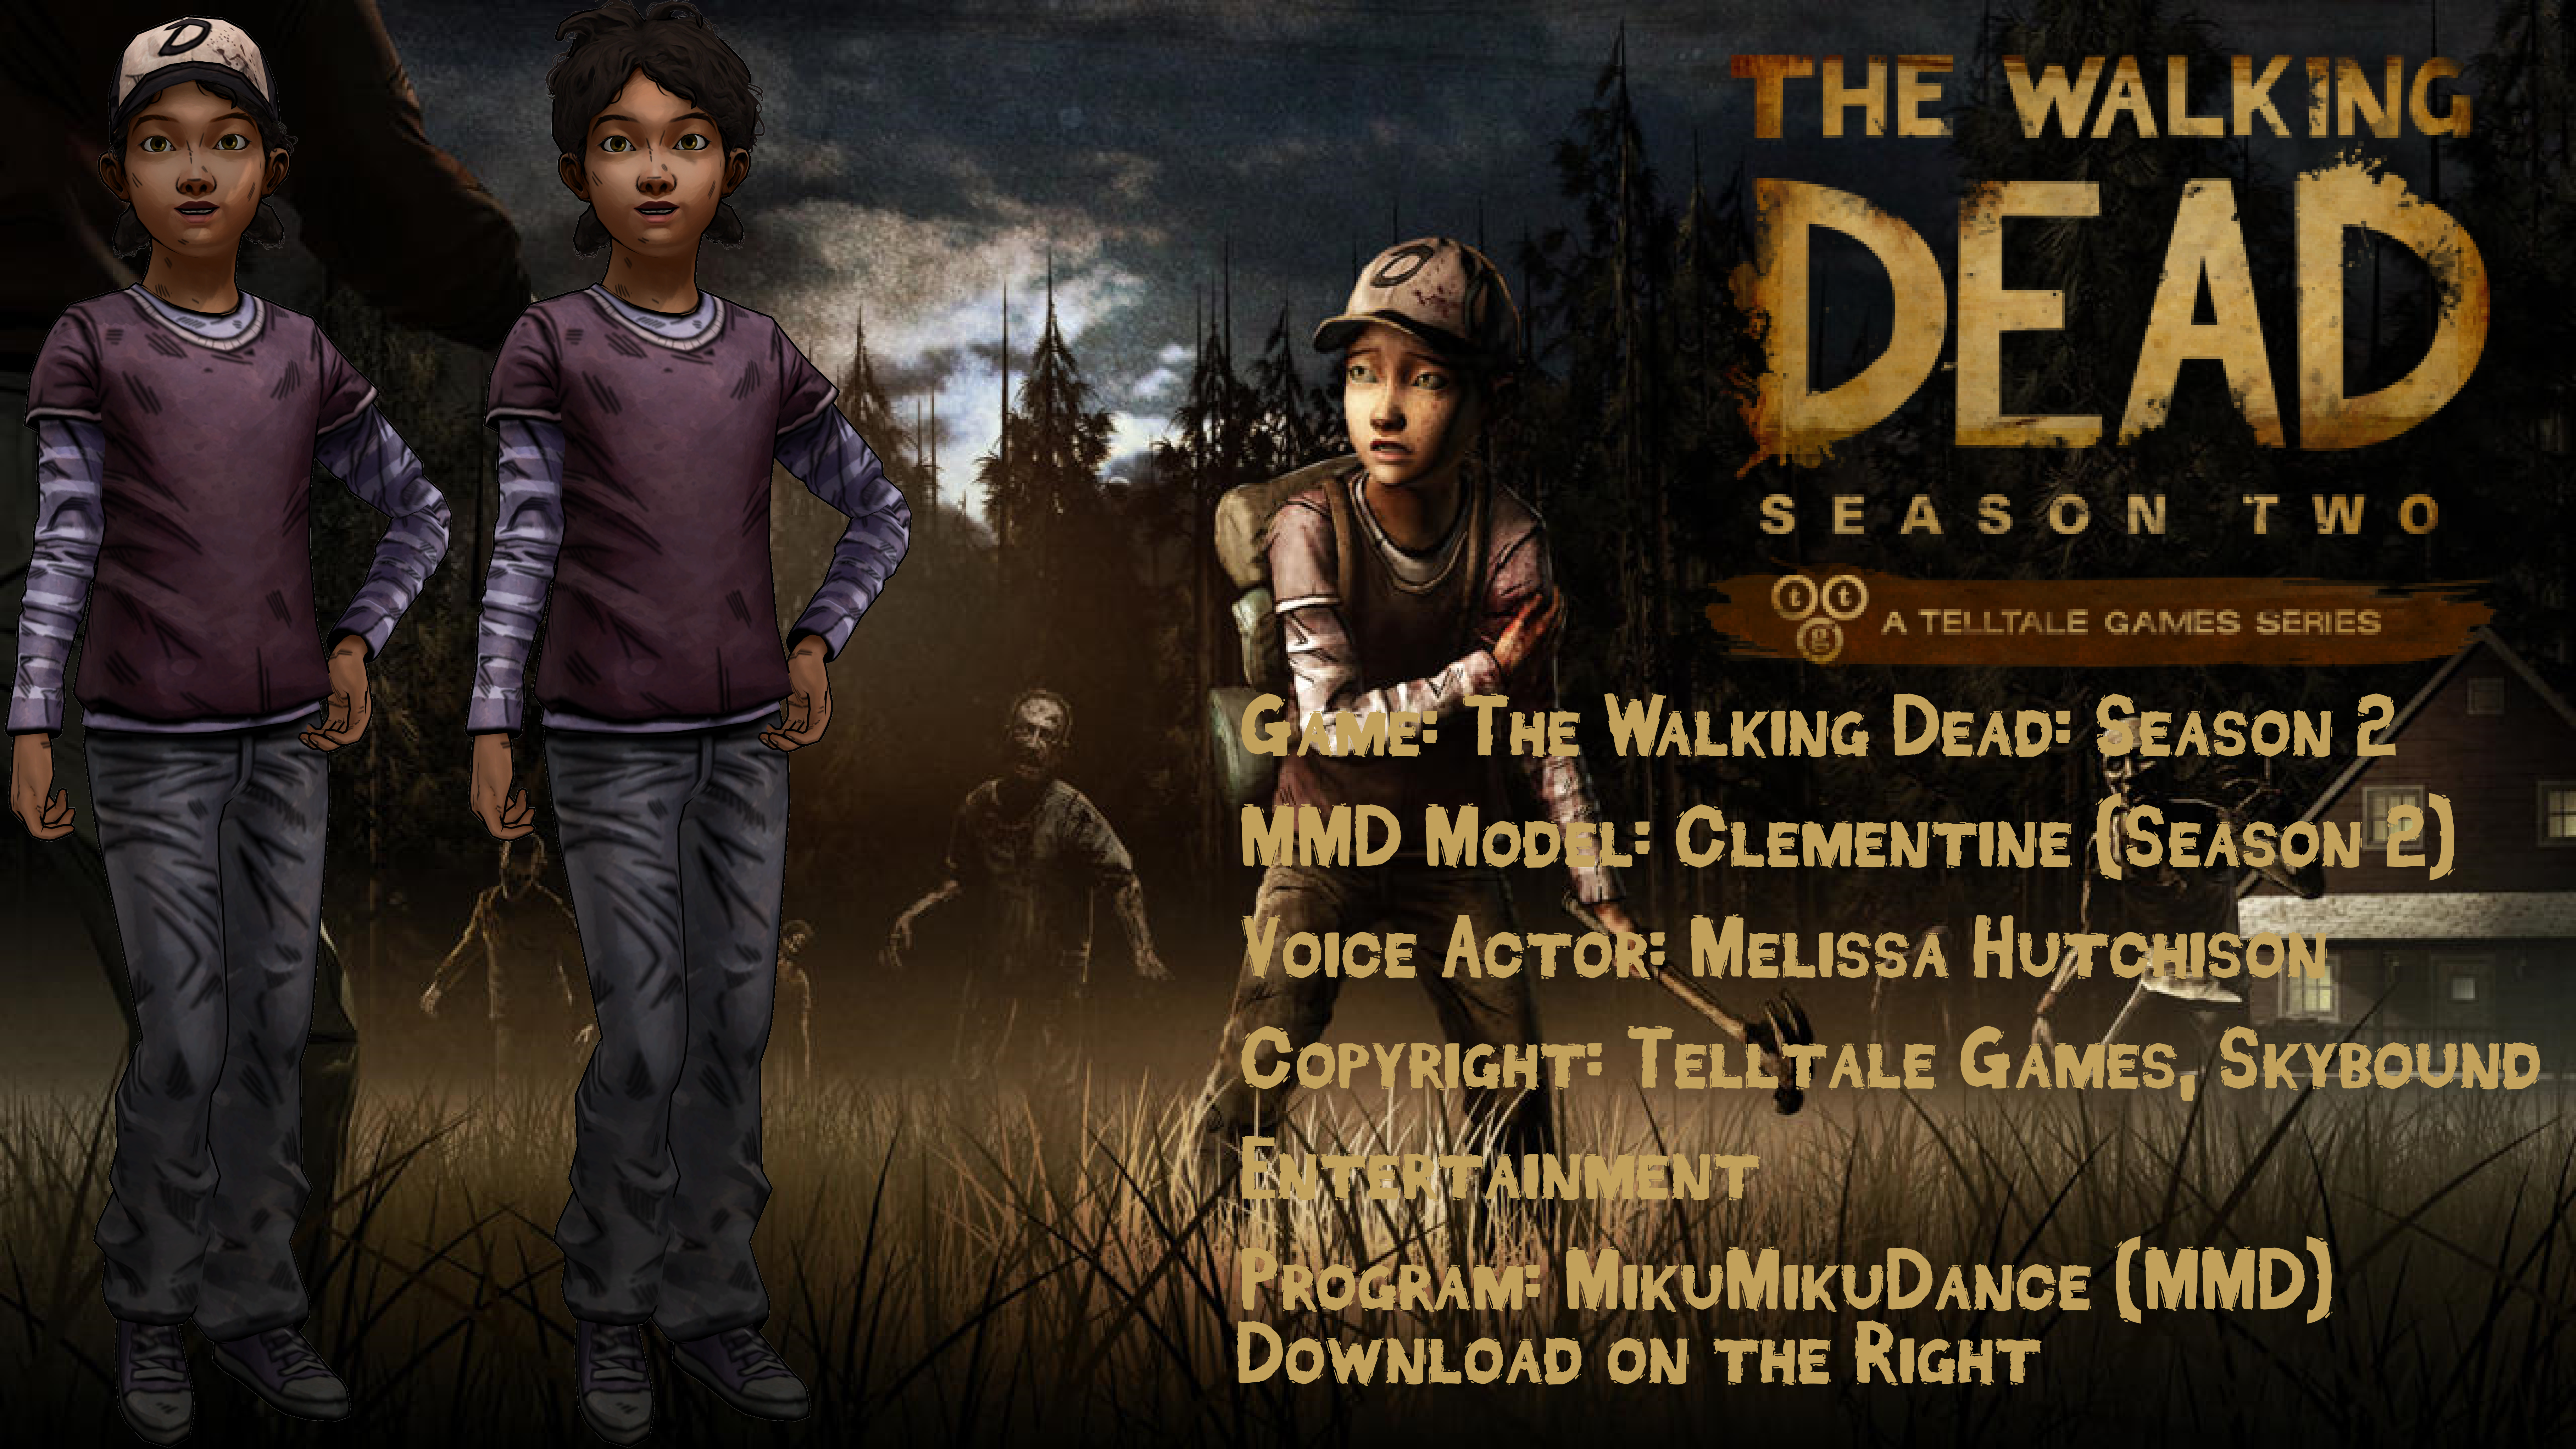 The Walking Dead Mmd Season 2 Clementine Dl By Lilothestitch On Deviantart